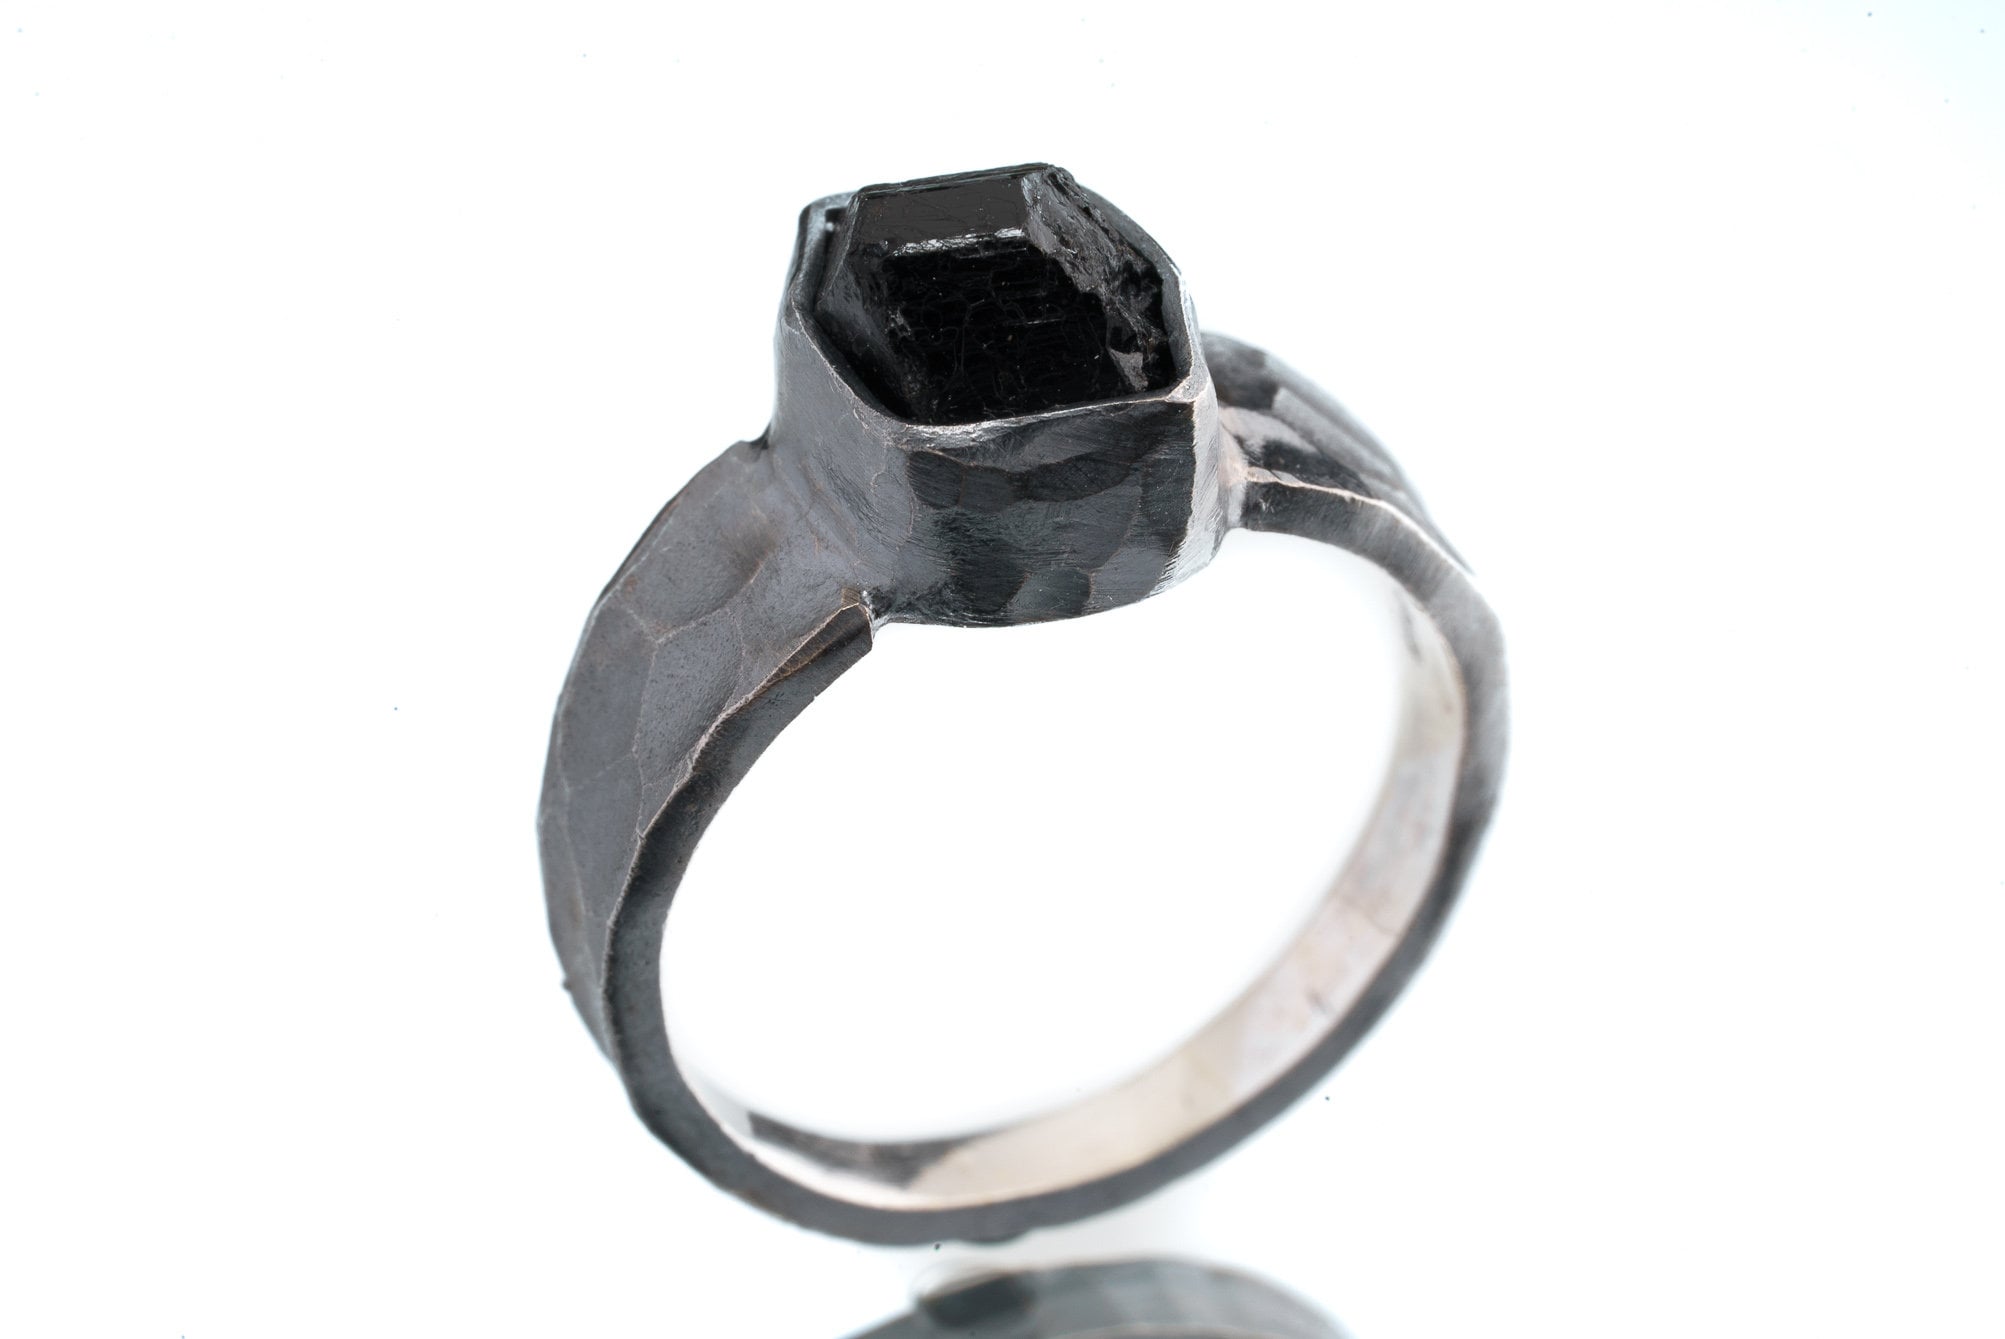 Raw Australian Tourmaline - Unisex / Men - Large Crystal Ring - Size 10 1/2 US - 925 Sterling Silver - Hammer Textured & Oxidised